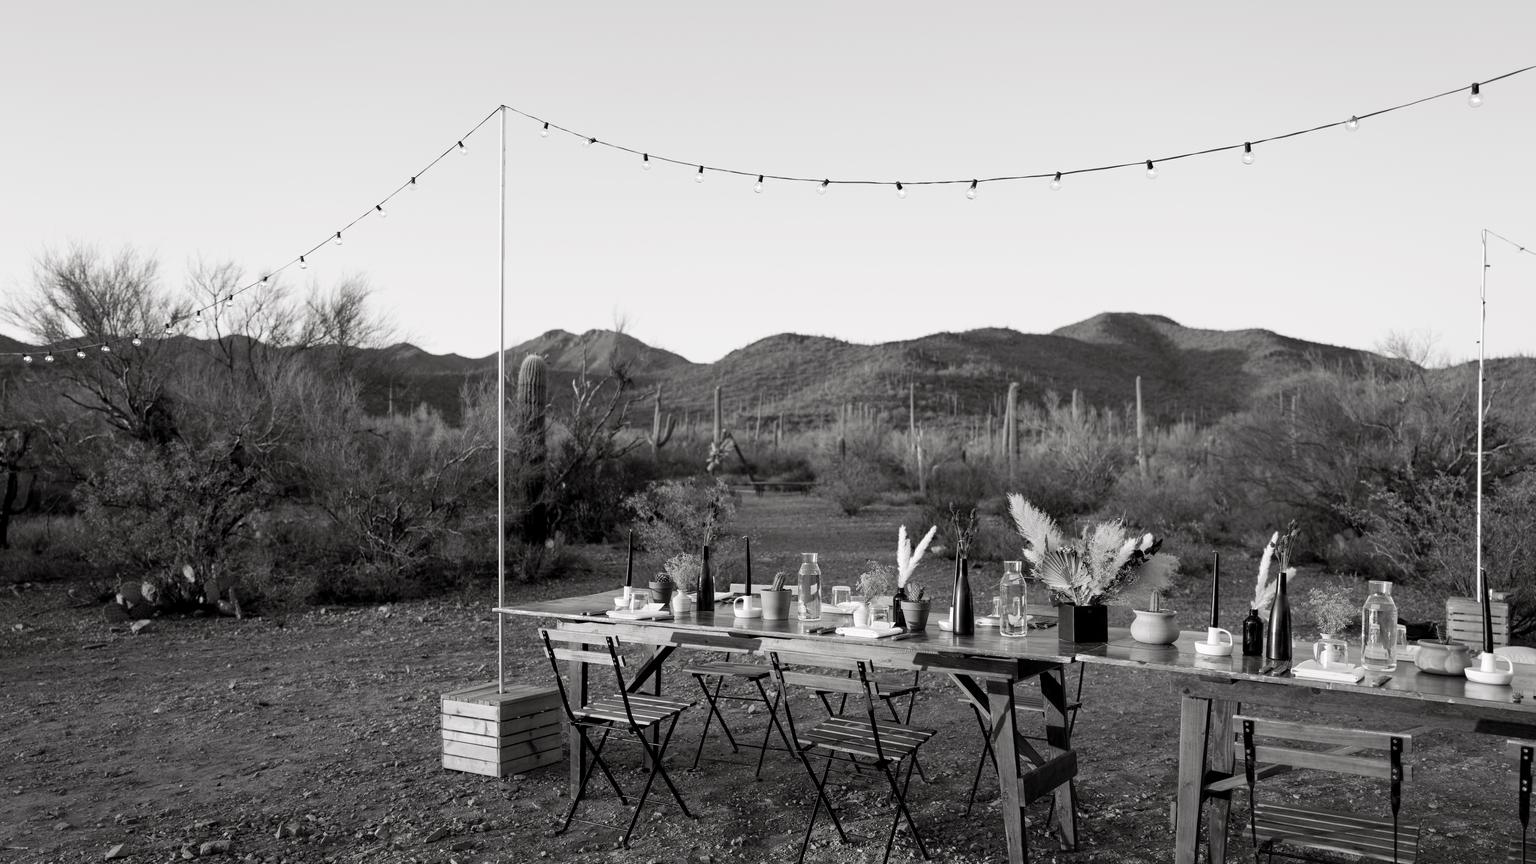 Leica Q2M - Pretty tabletop setup in the desert.